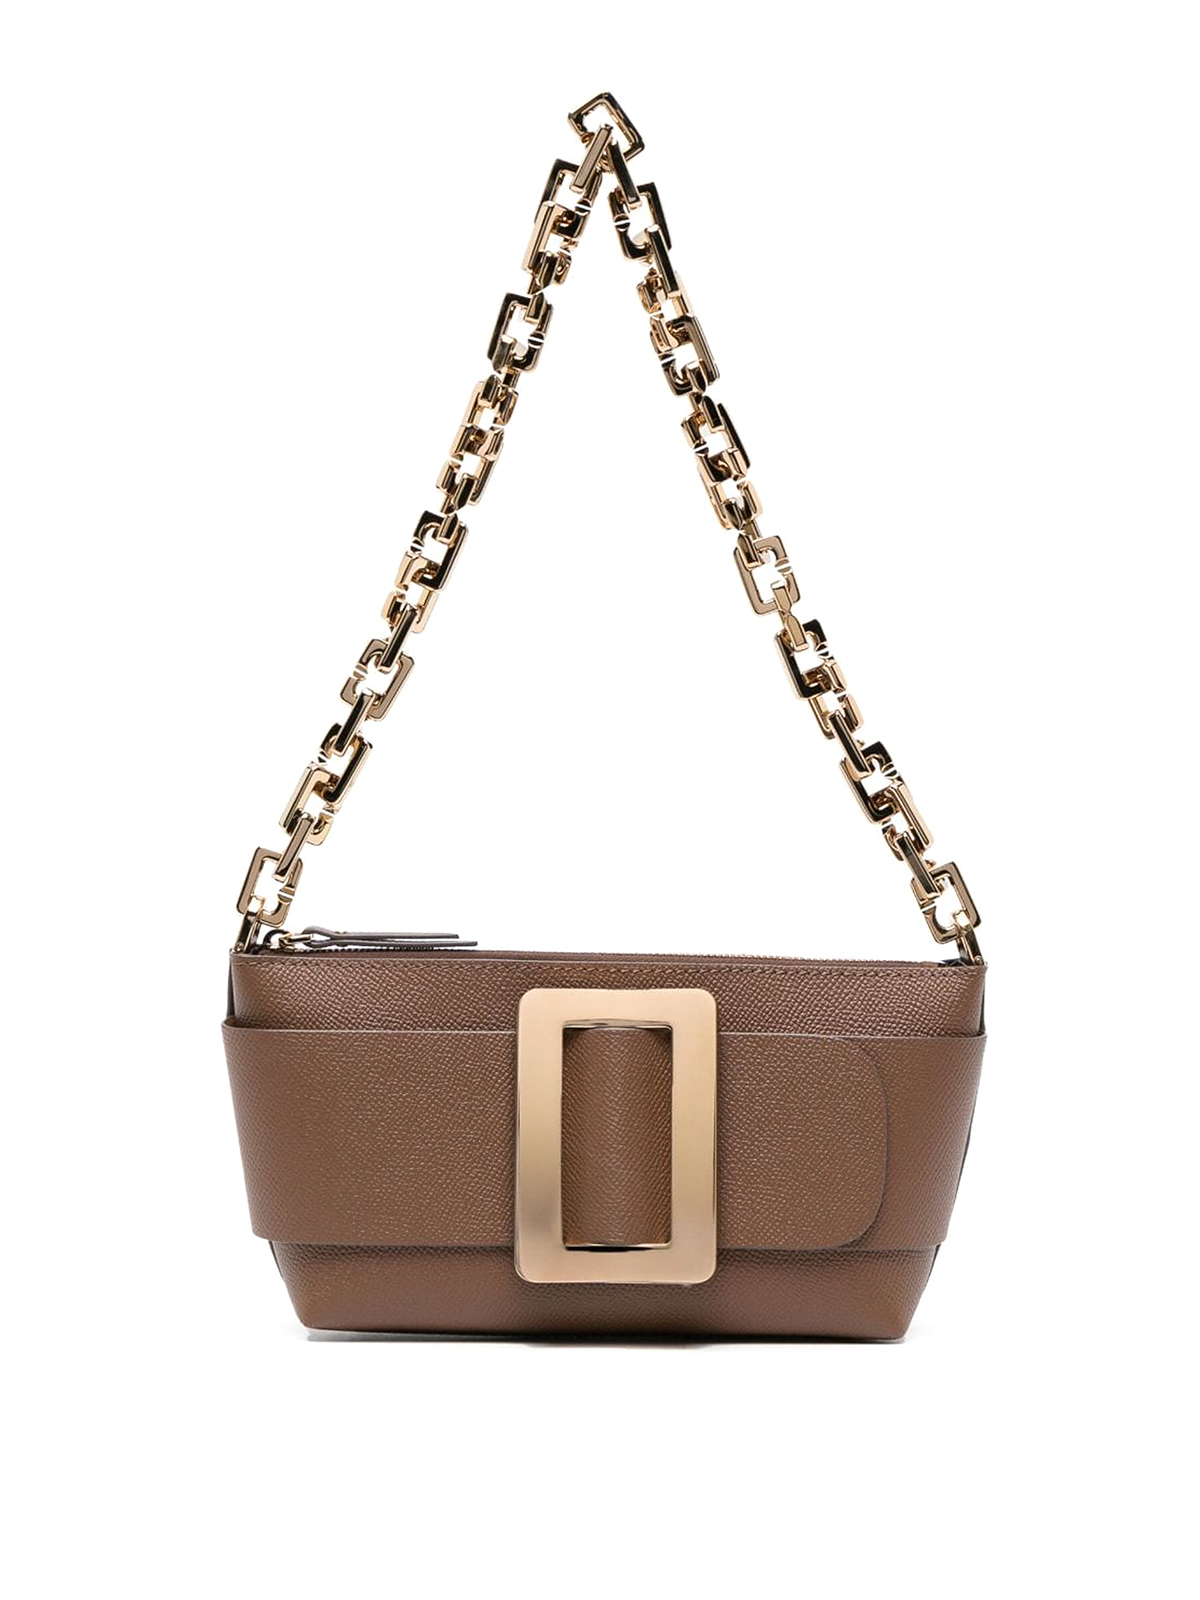 Buckle pouchette leather handbag by Boyy